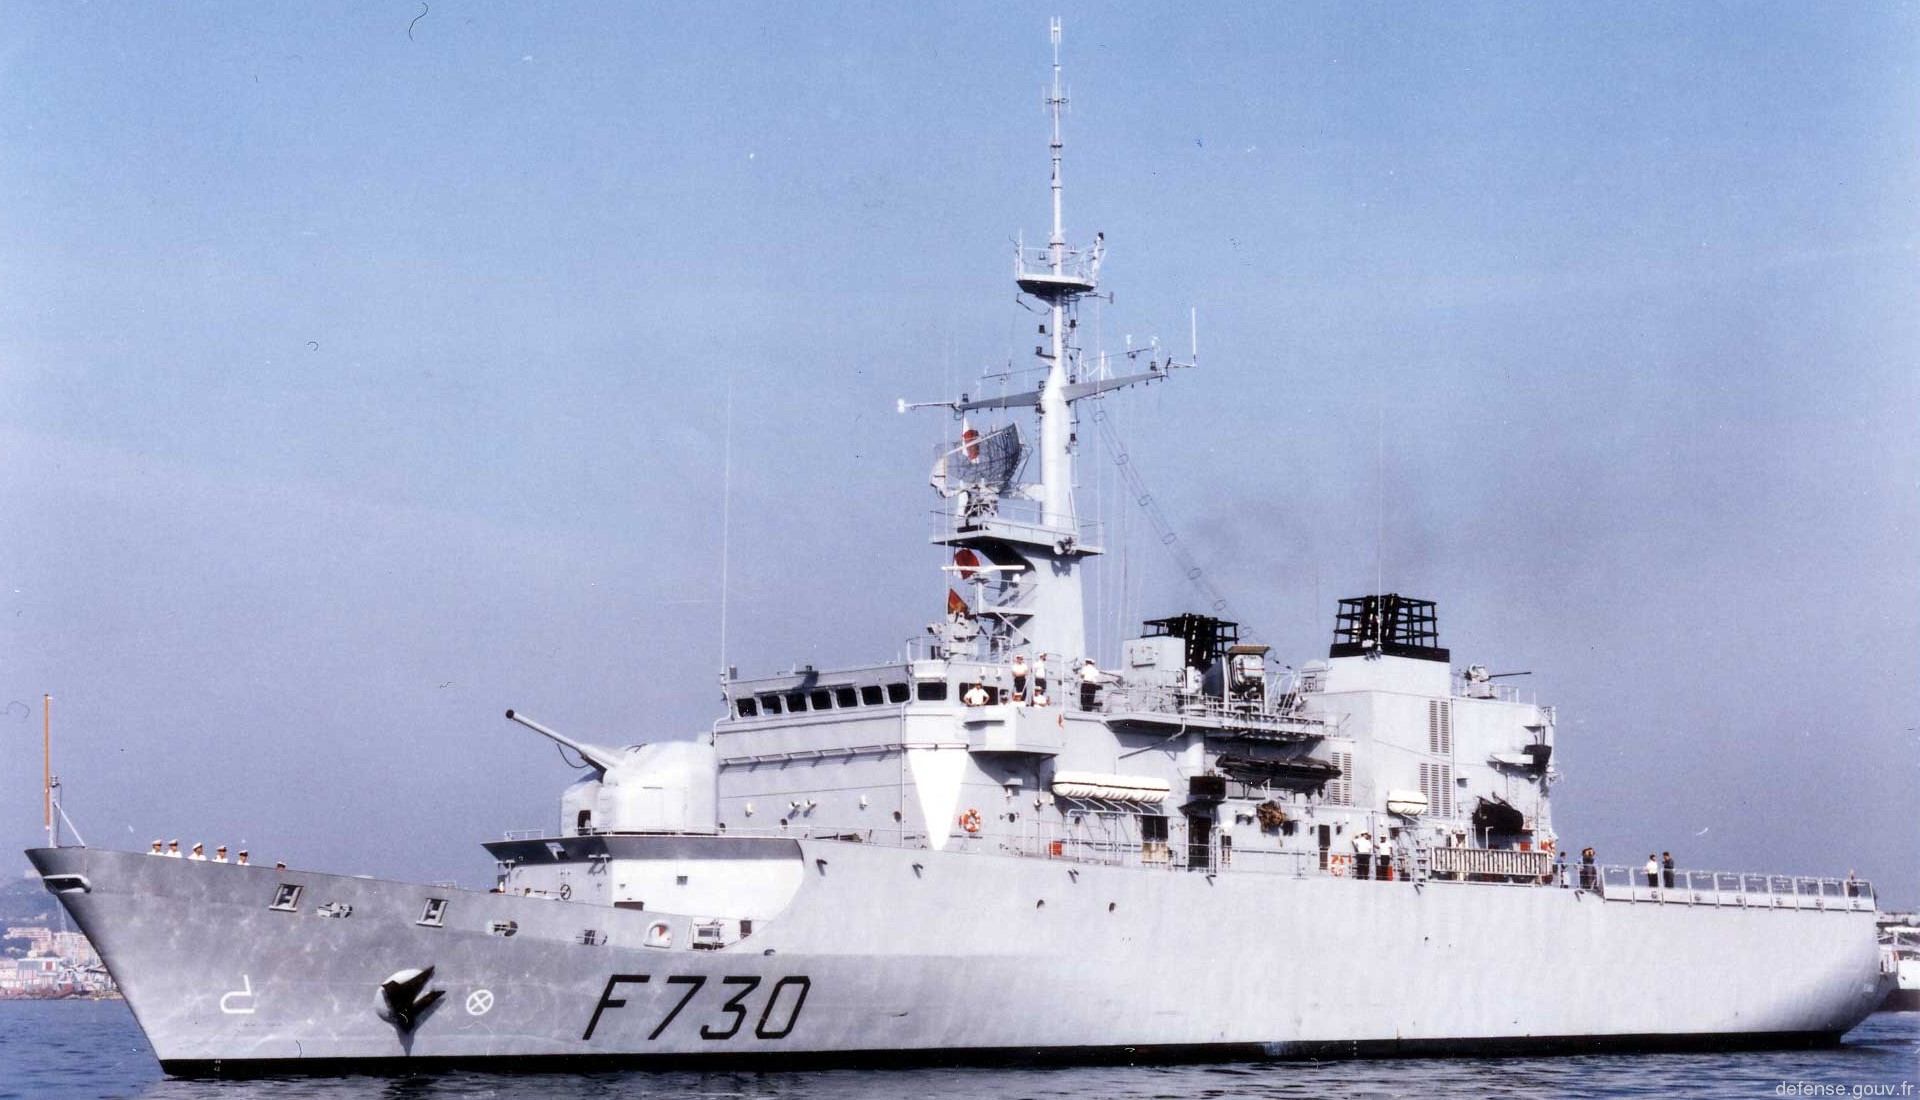 f-730 fs floreal class frigate french navy marine nationale fregate de surveillance 03